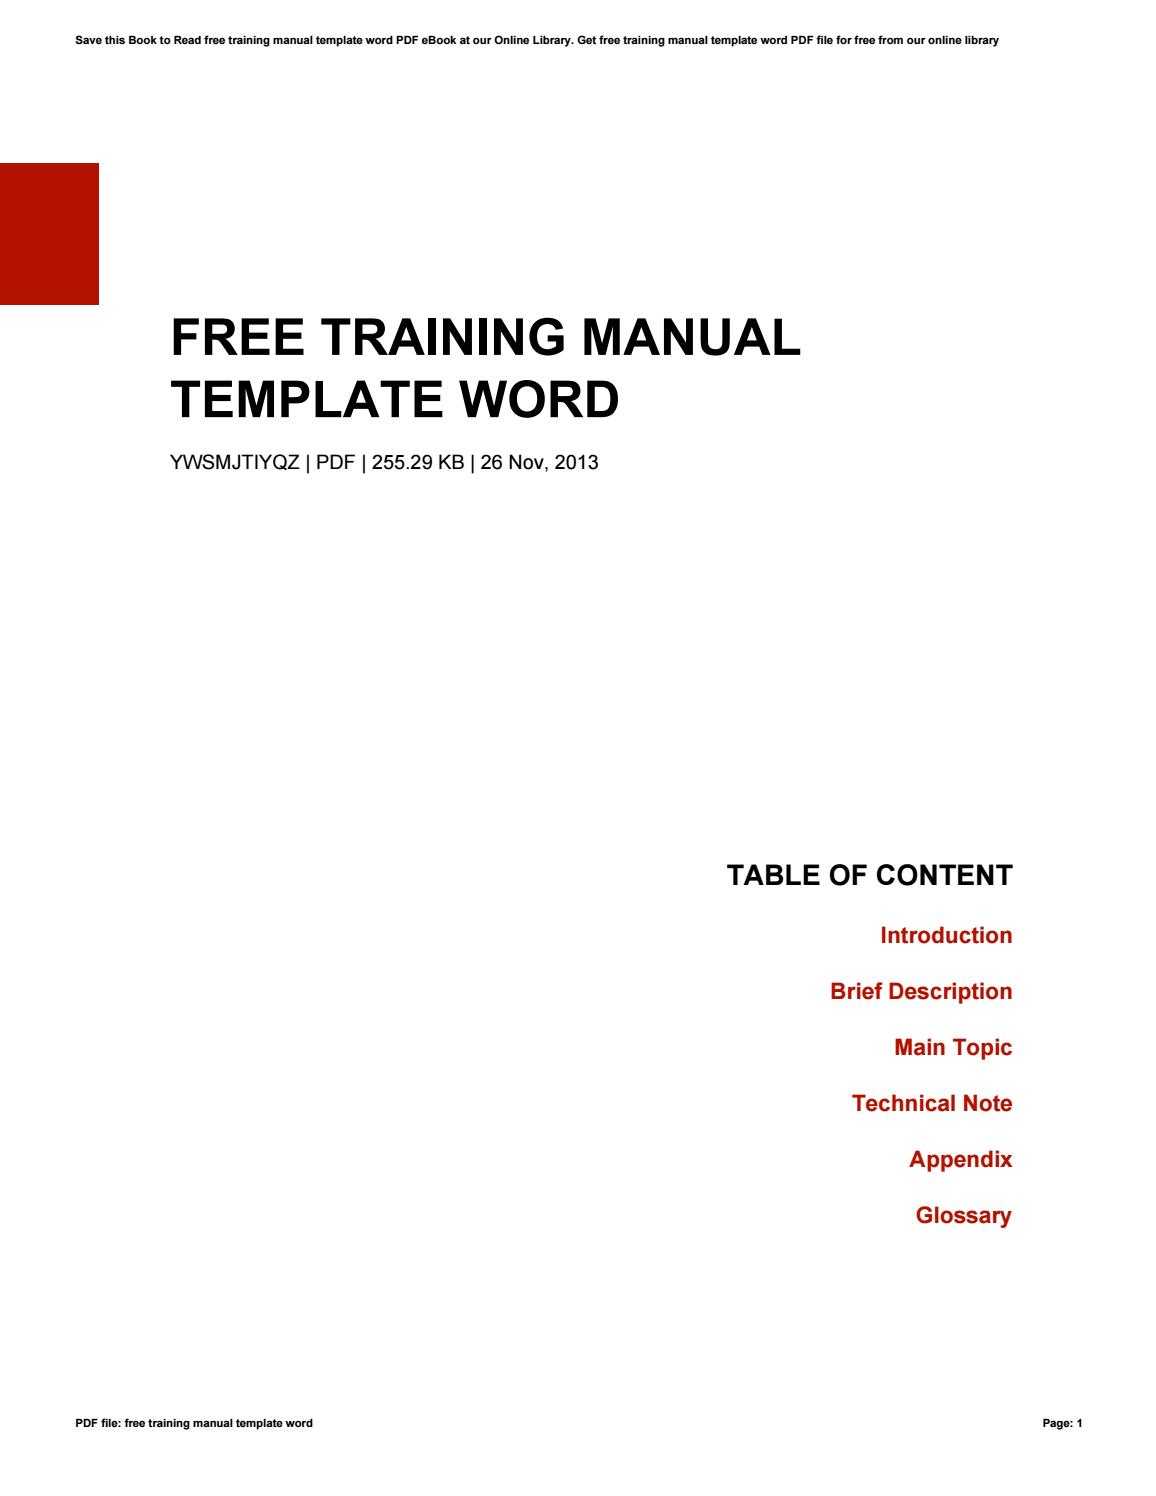 Free Training Manual Template Wordkazelink257 – Issuu With Training Documentation Template Word